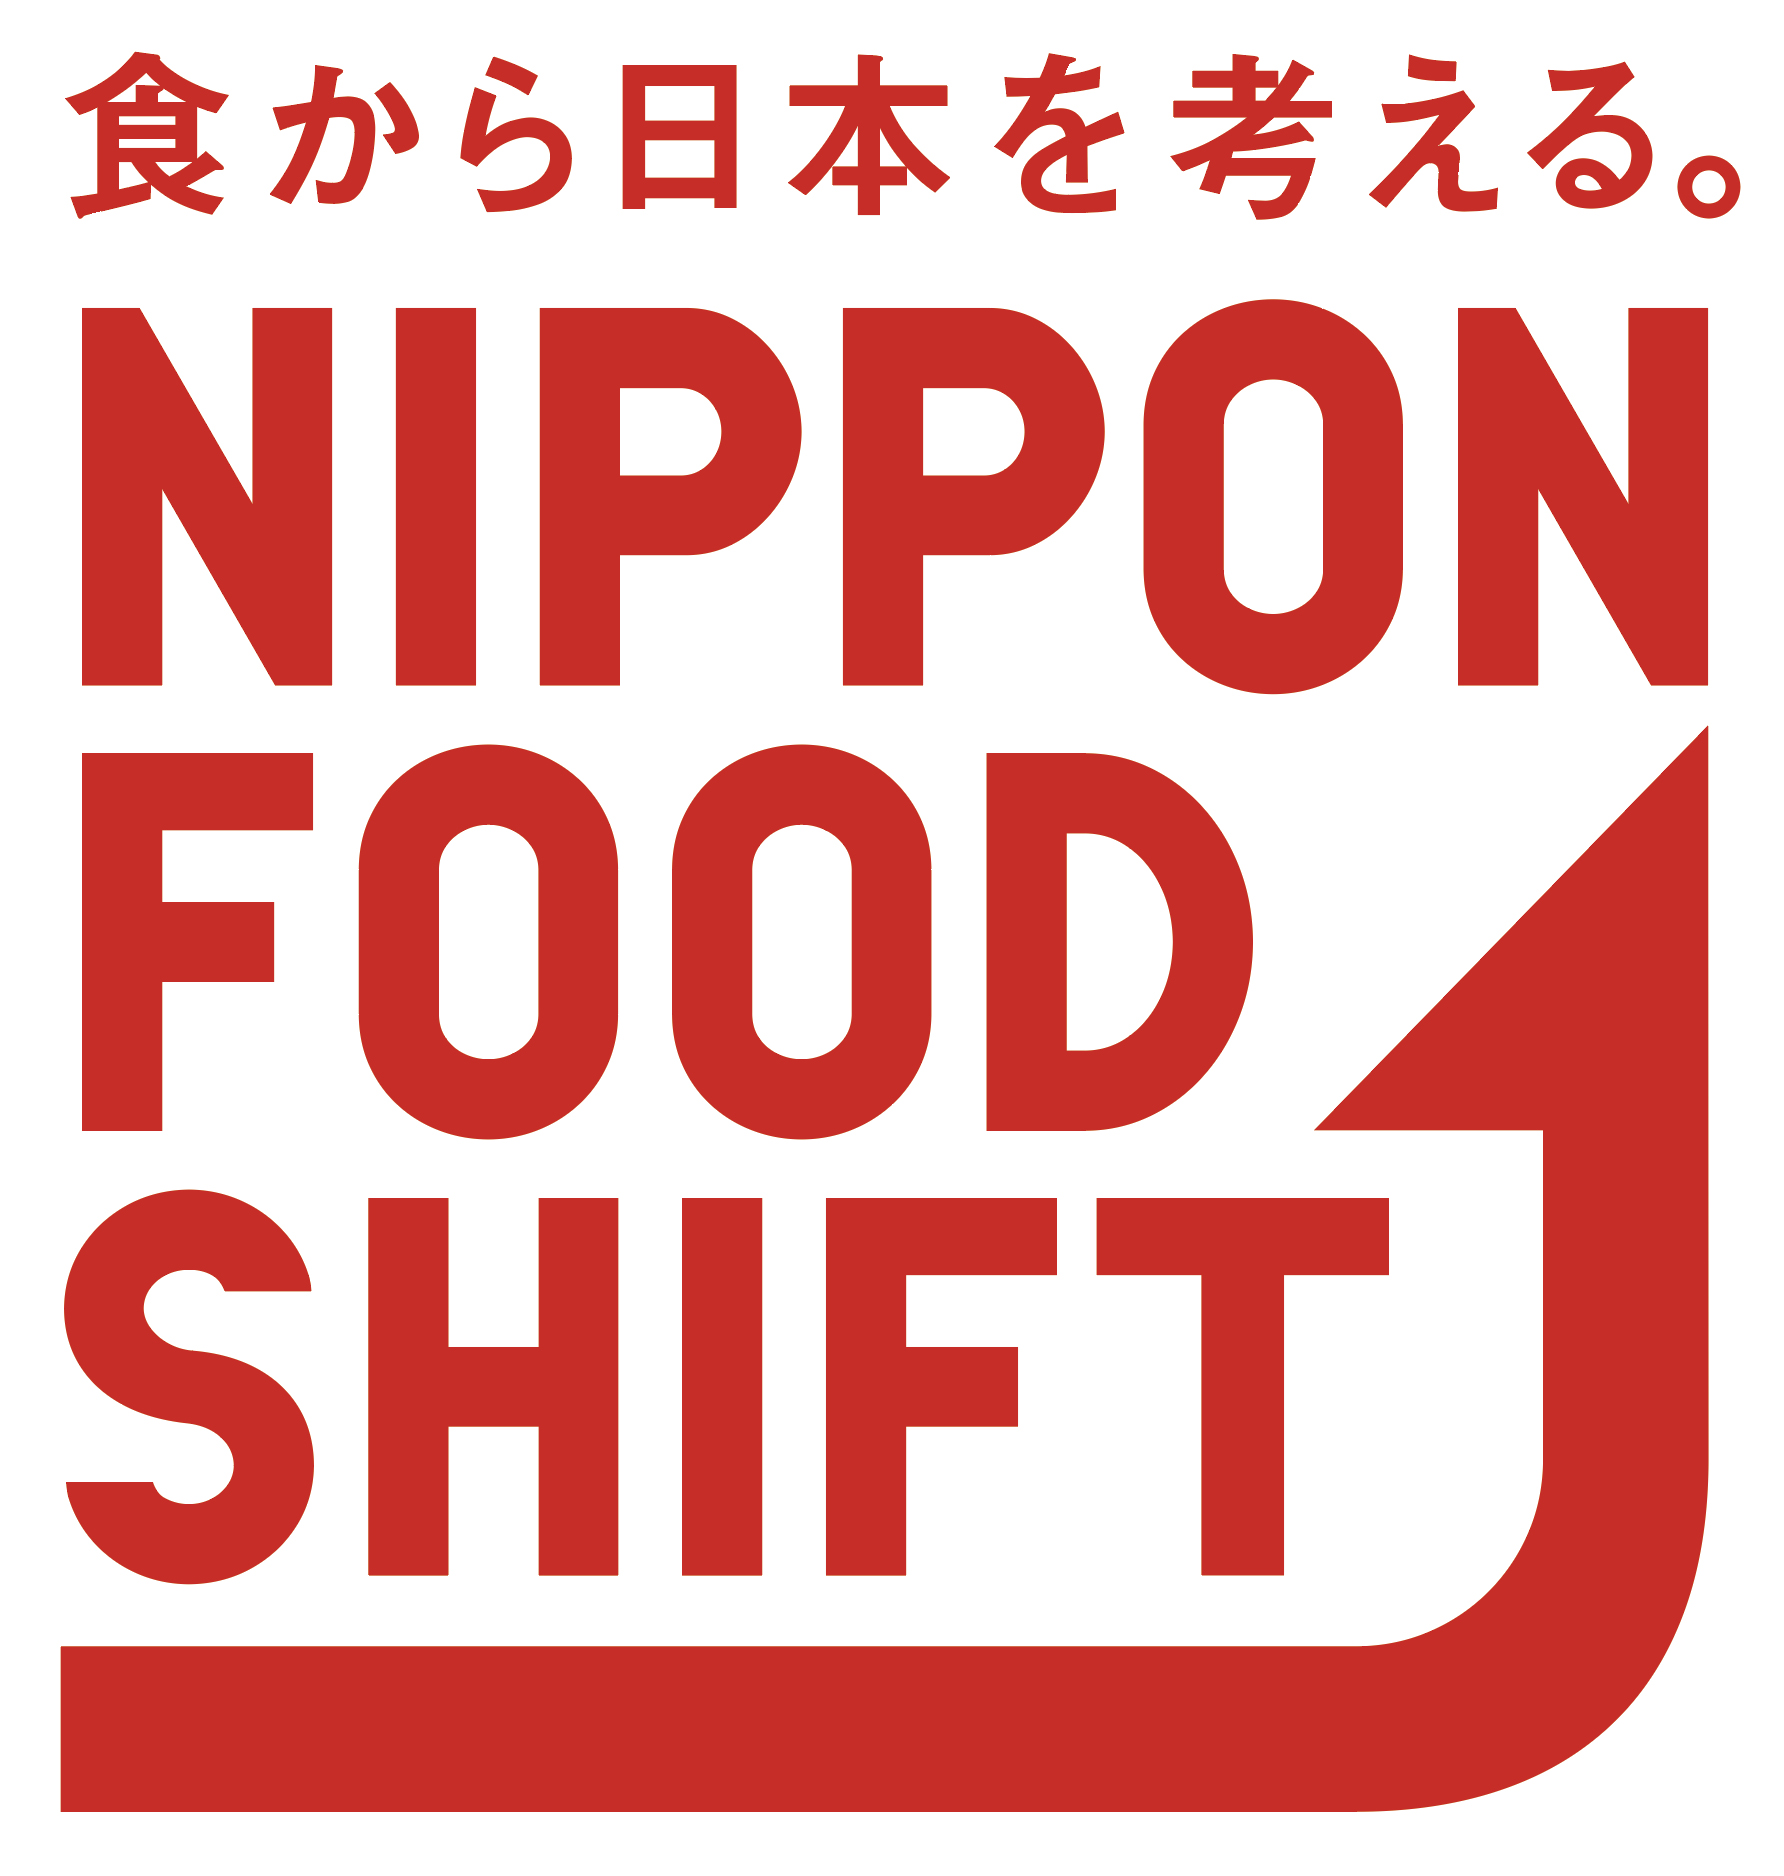 NIPPON FOOD SHIFT